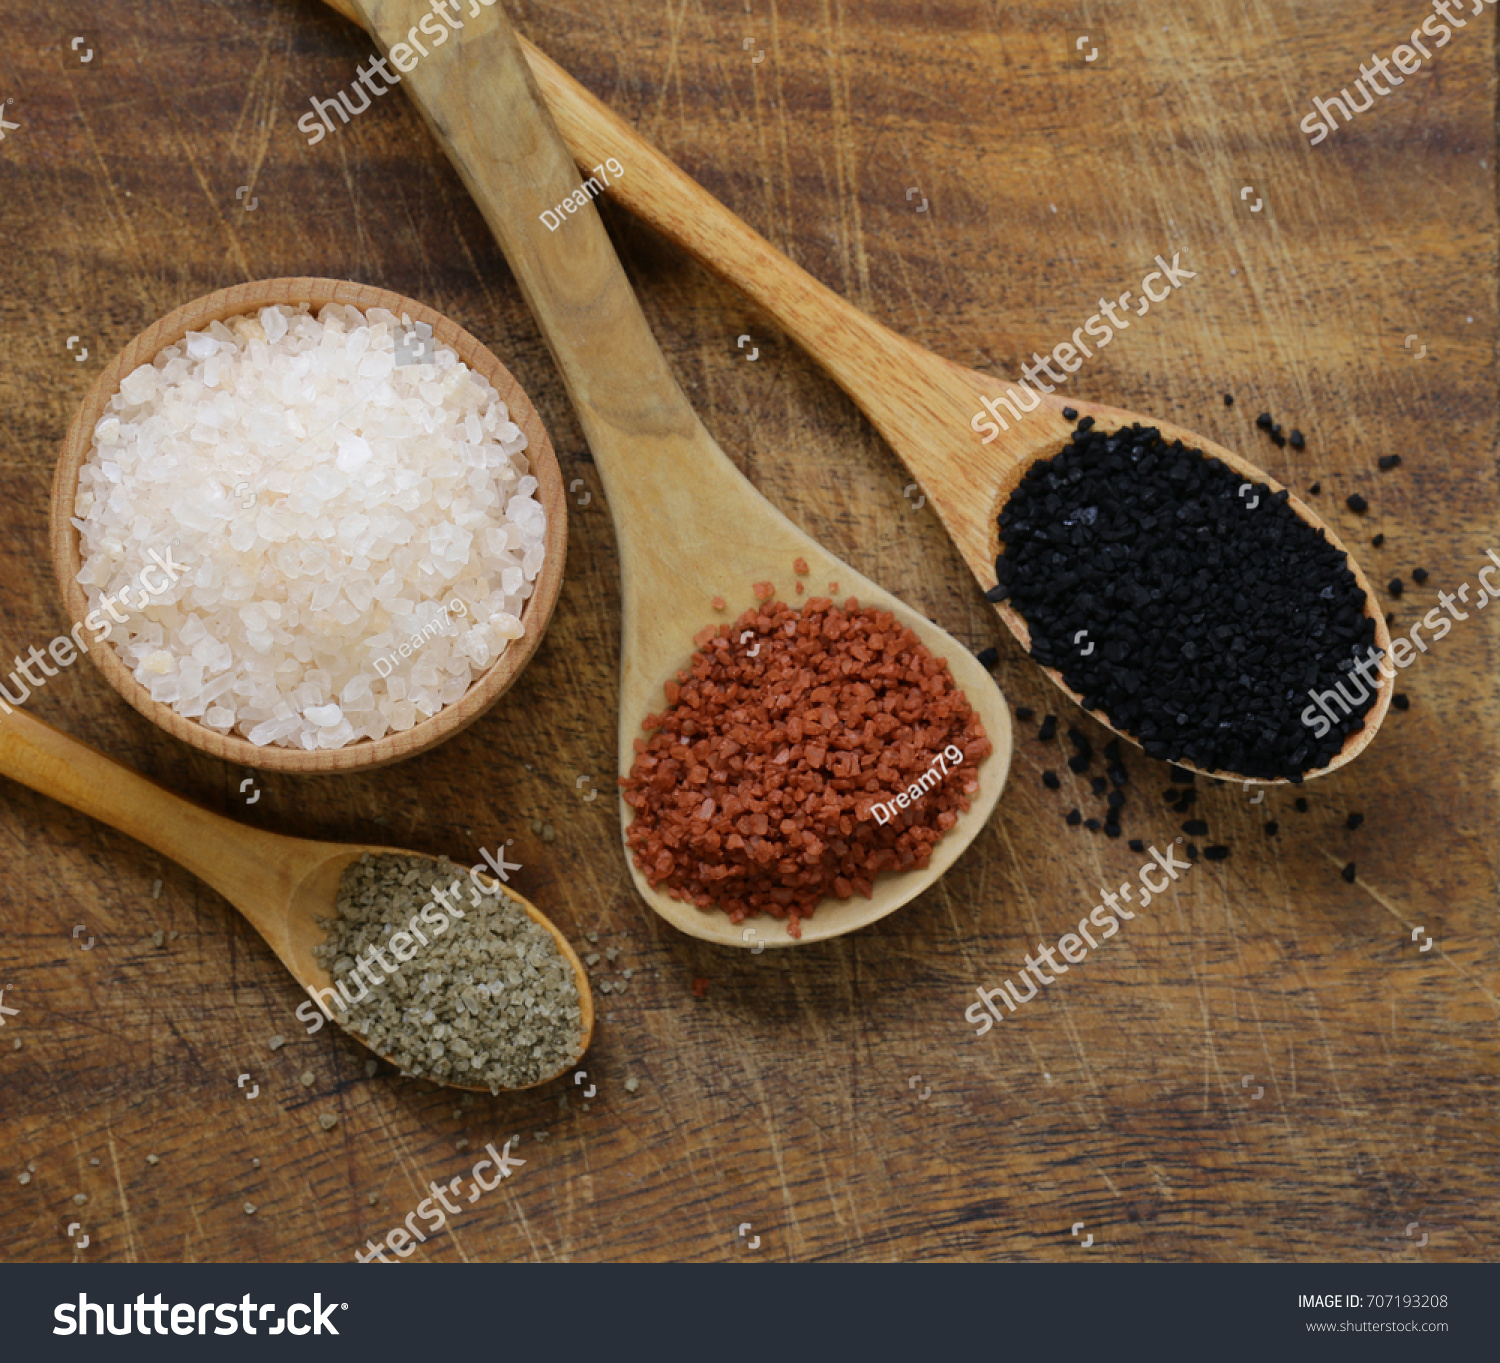 Different gourmet varieties of salt - black and red Hawaiian variety #707193208